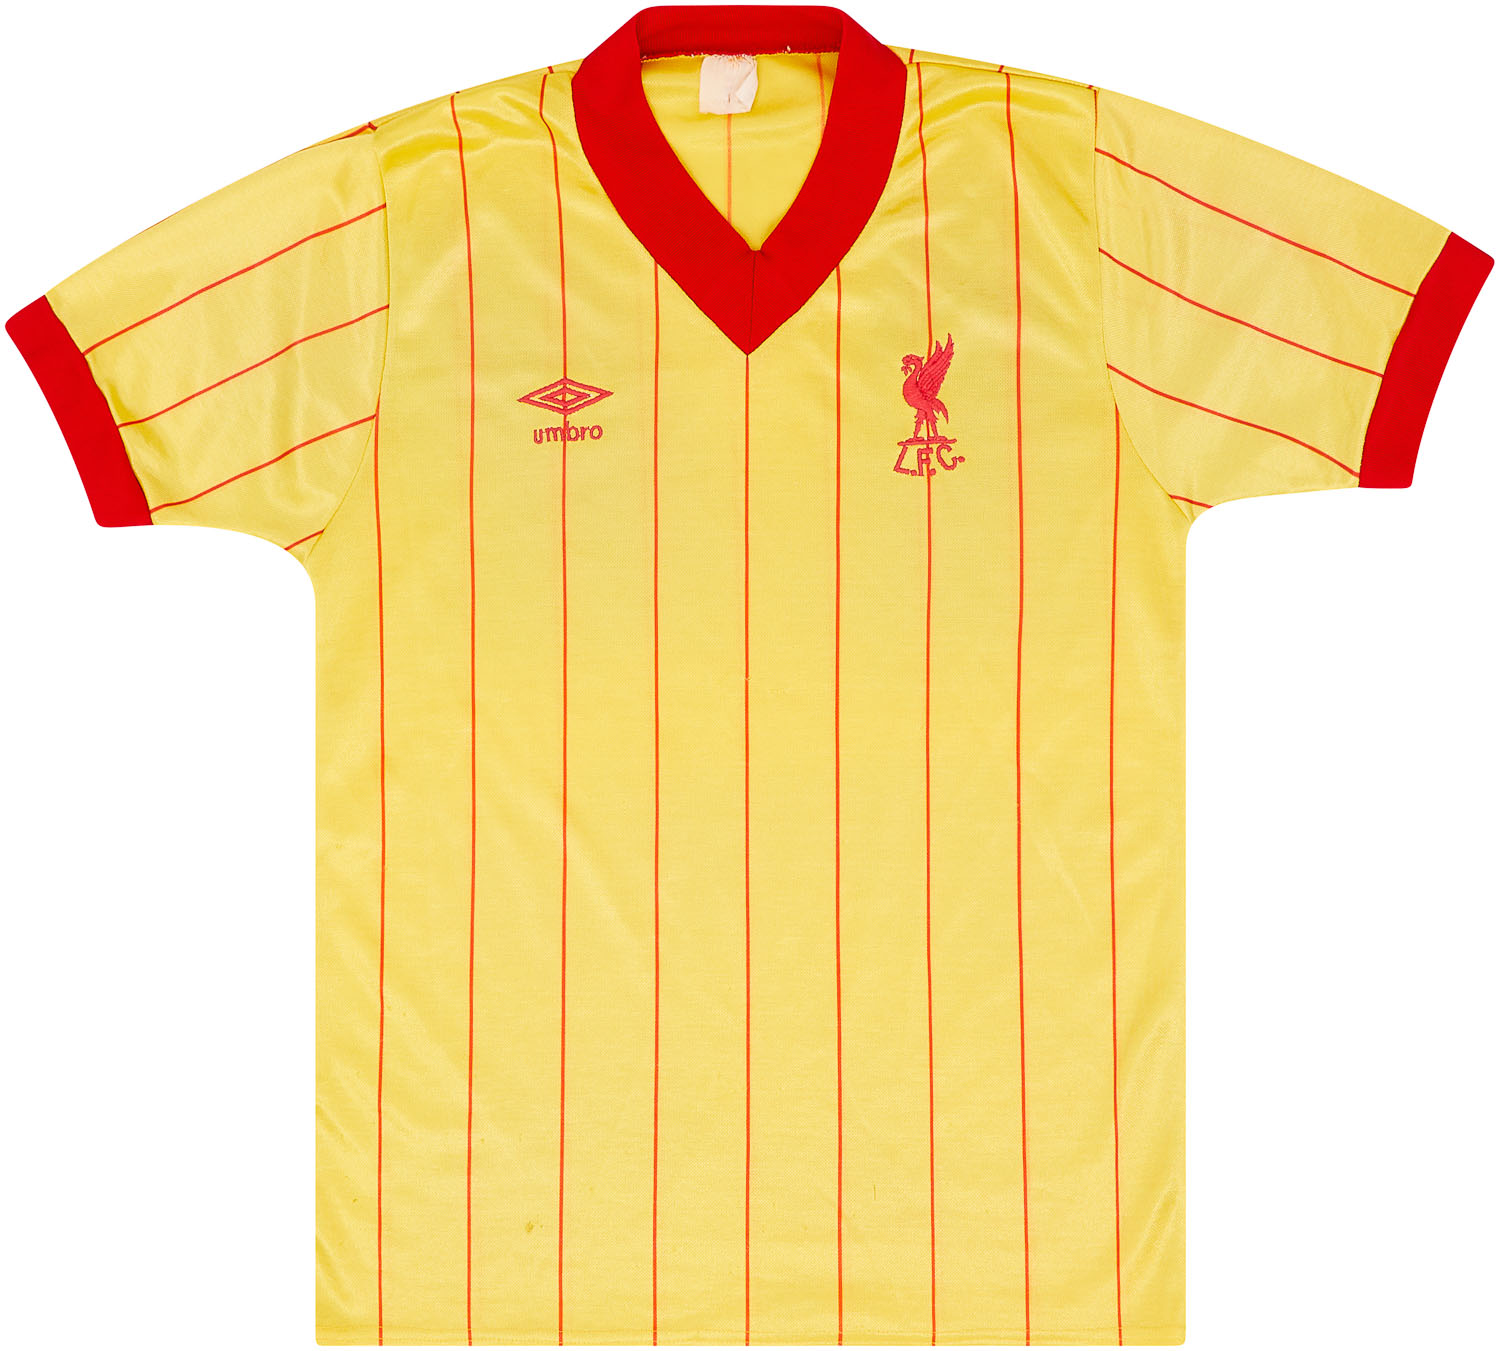 1981-84 Liverpool Away Shirt - 6/10 - ()